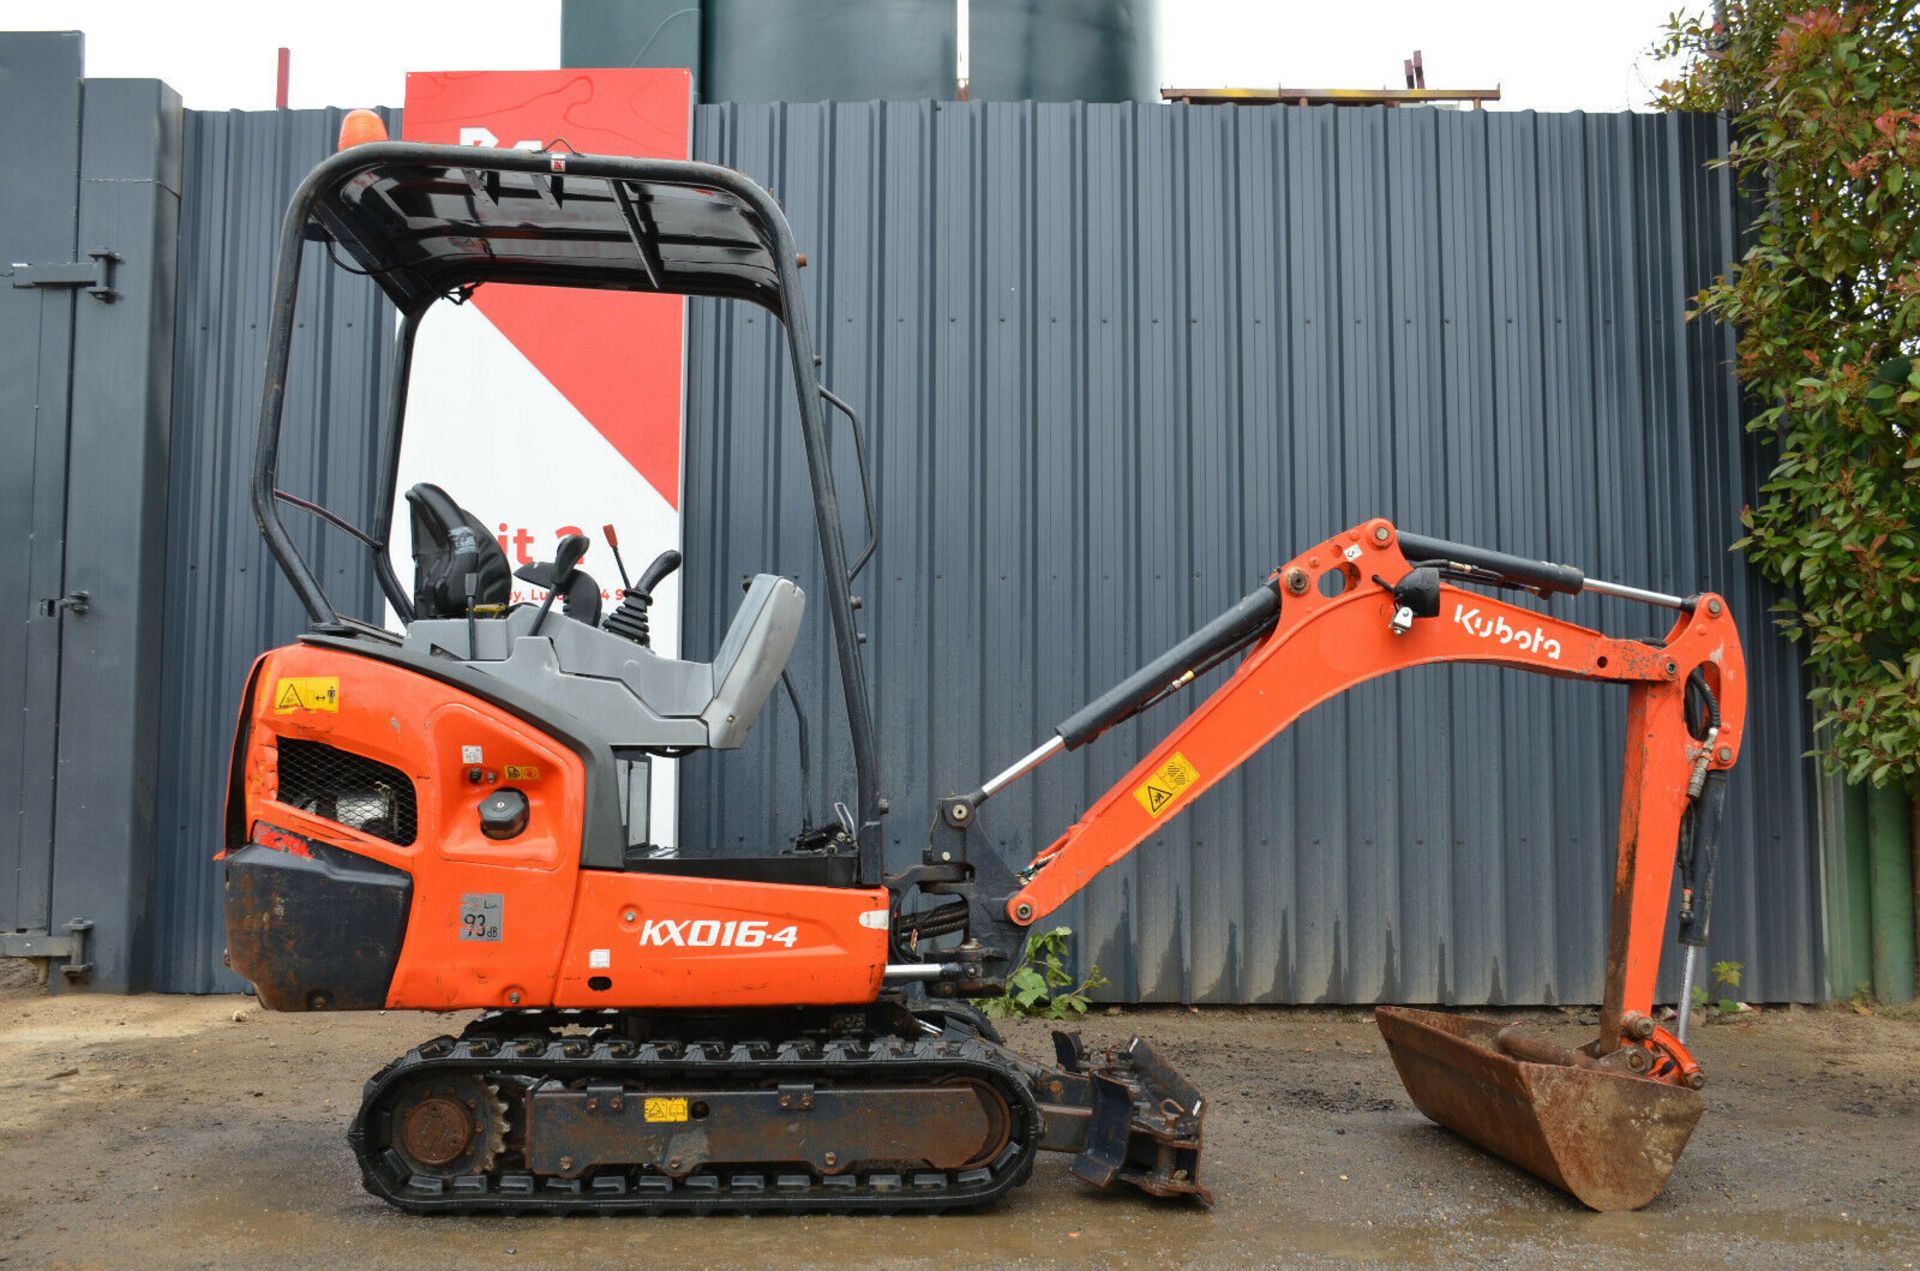 Kubot KX016-4 Mini Excavator 2014 - Image 12 of 12